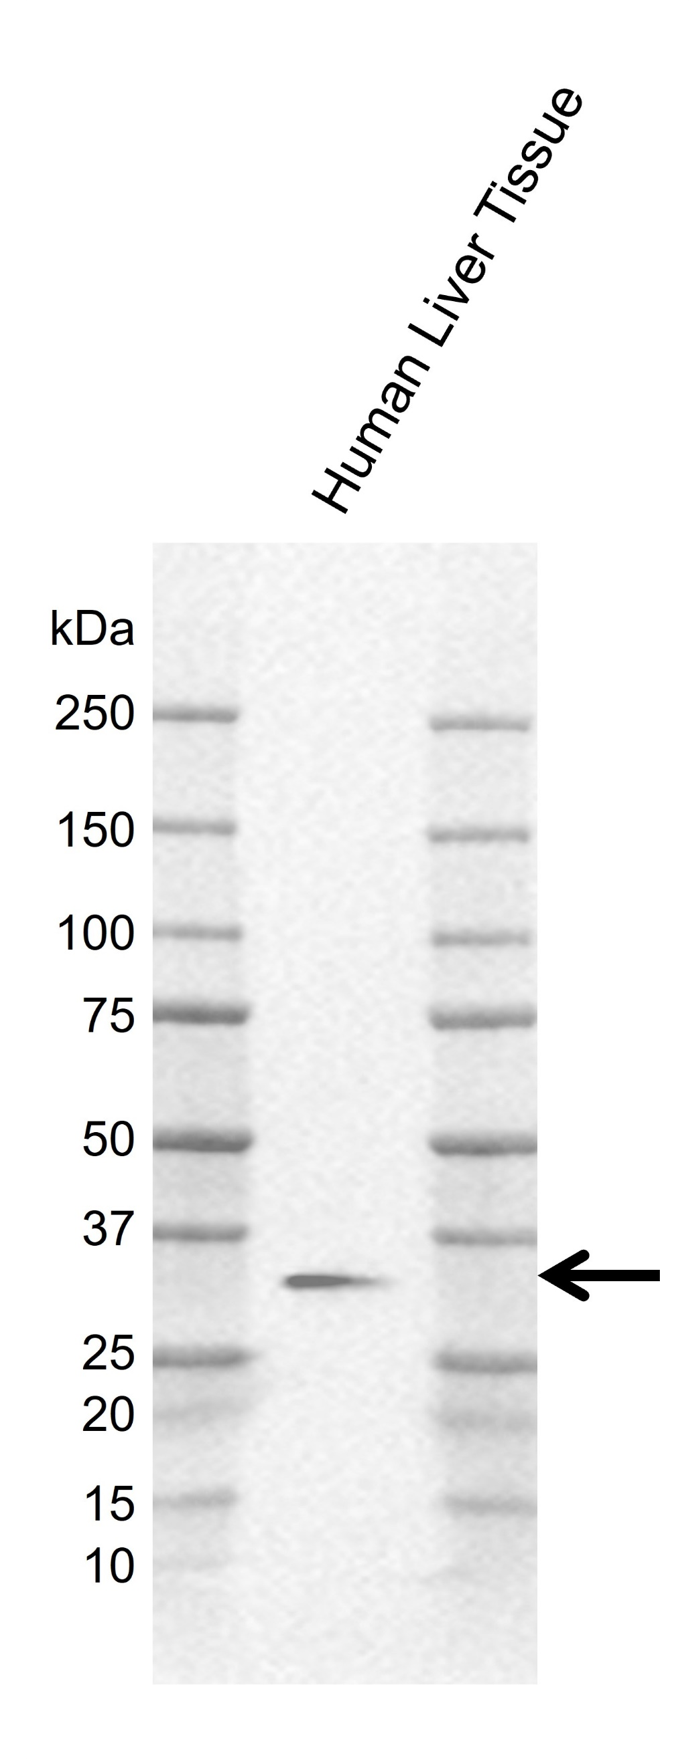 Anti Human AMPK Beta 2 Antibody, clone AB03/2F11 gallery image 2